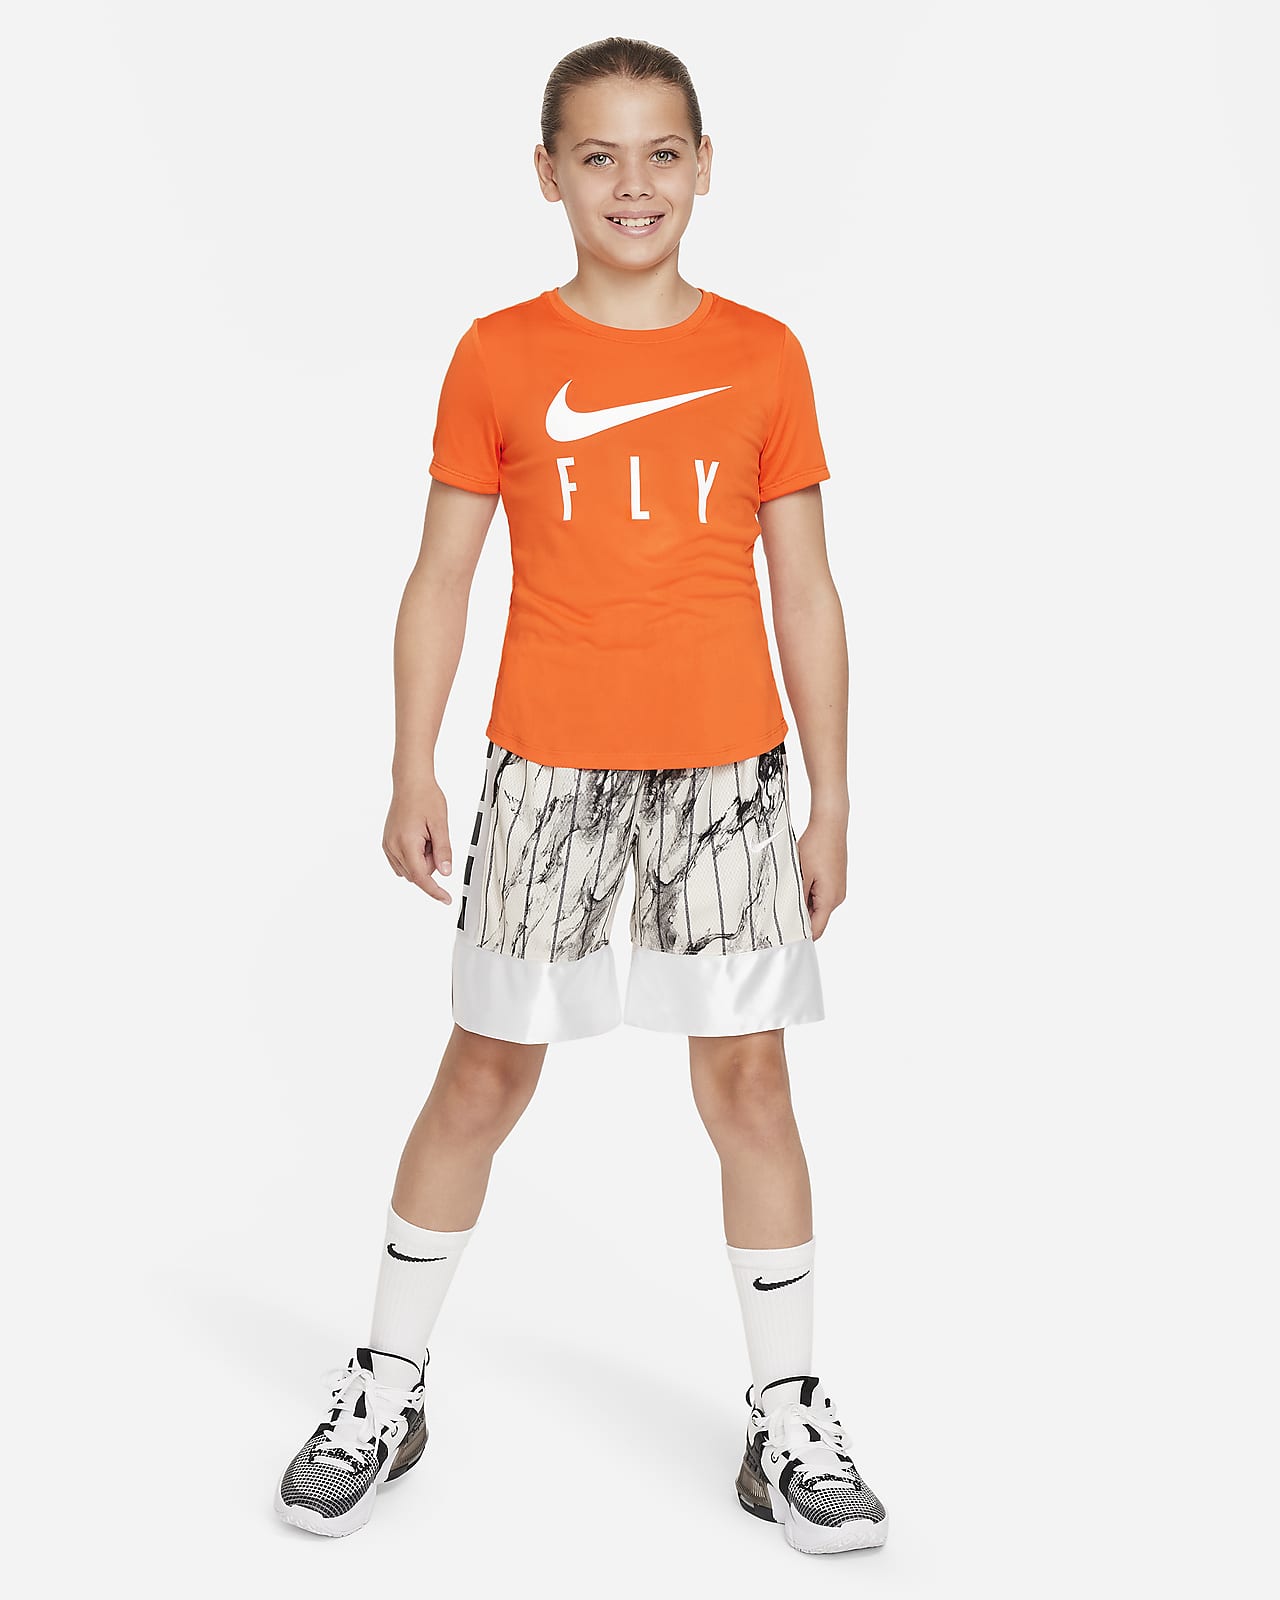 (Girls\') Dri-FIT Kids\' T-Shirt. Swoosh Big Fly One Nike